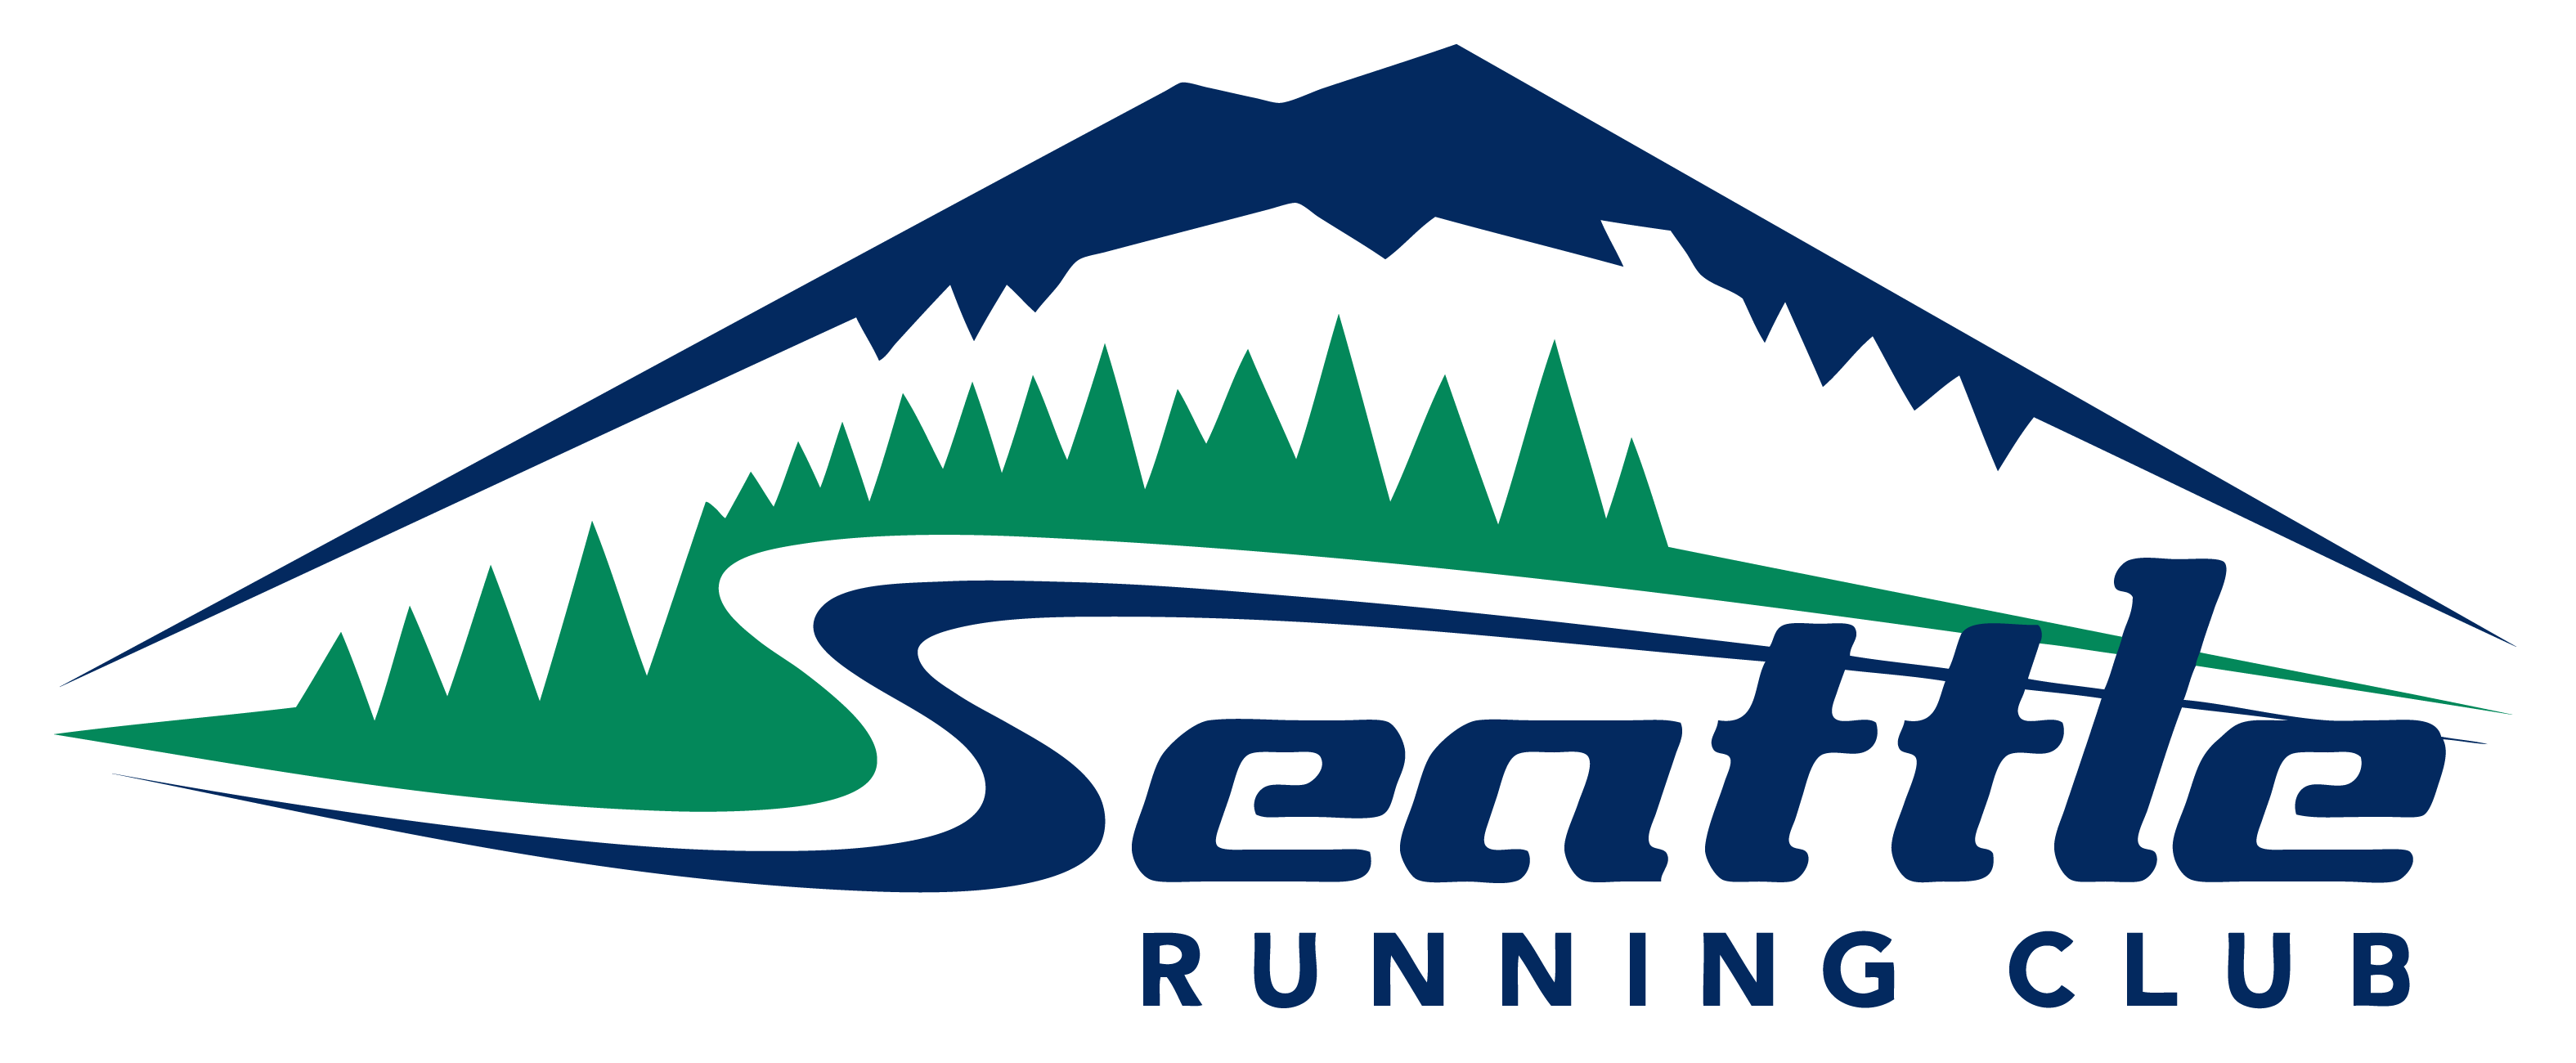 seattle running club